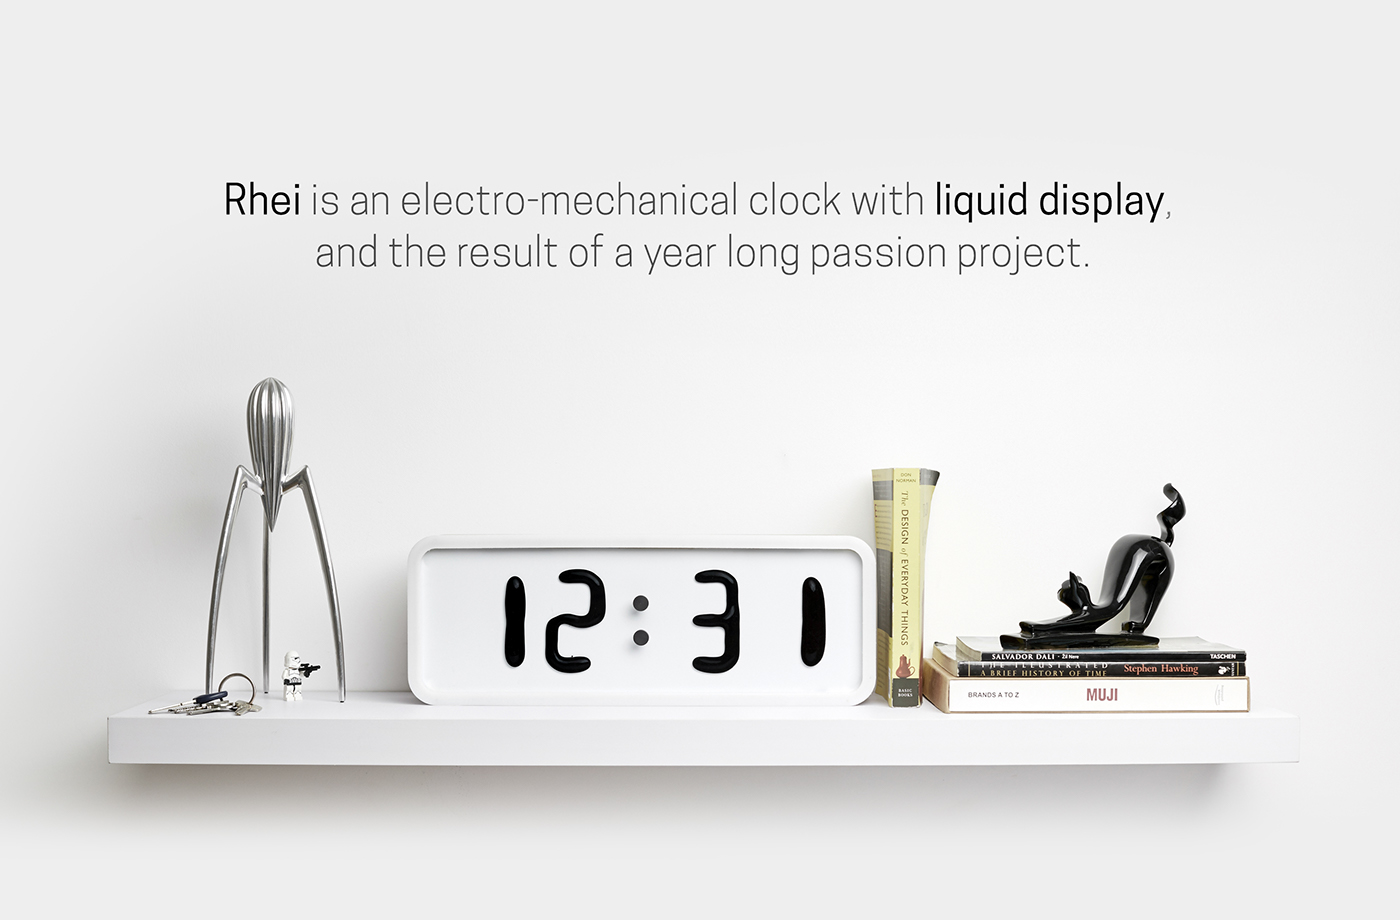 clock Liquid ferrofluid rhei time prototype mechanics Electronics magnet magnets device